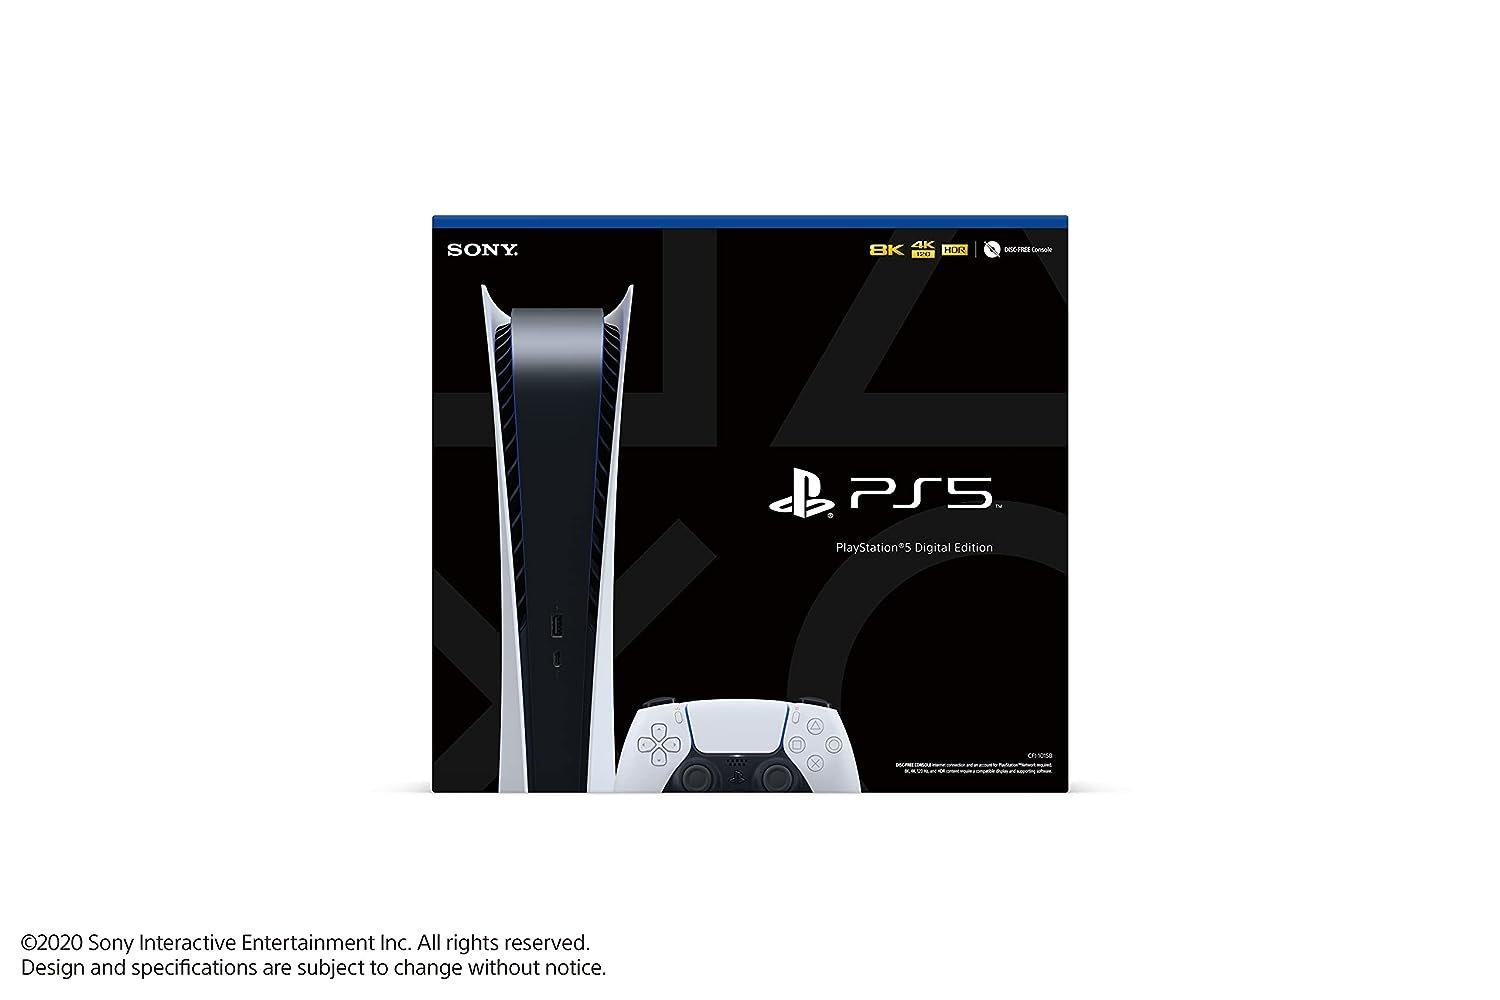 Console Playstation 5 (PS5) Digital Edition, Sony Playstation sony